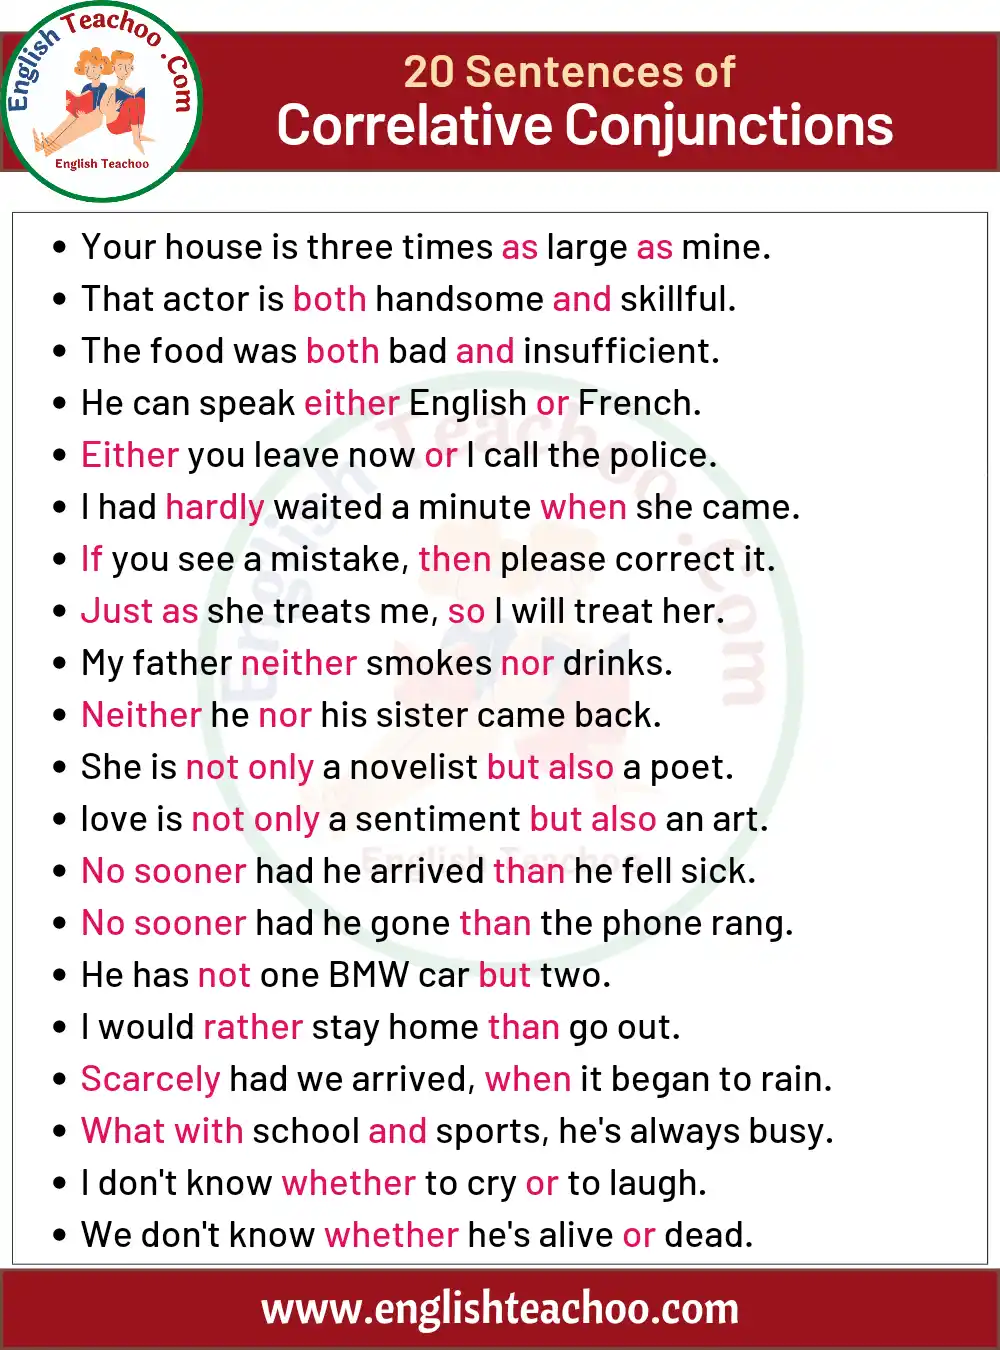 20-examples-of-correlative-conjunctions-in-sentences-englishteachoo